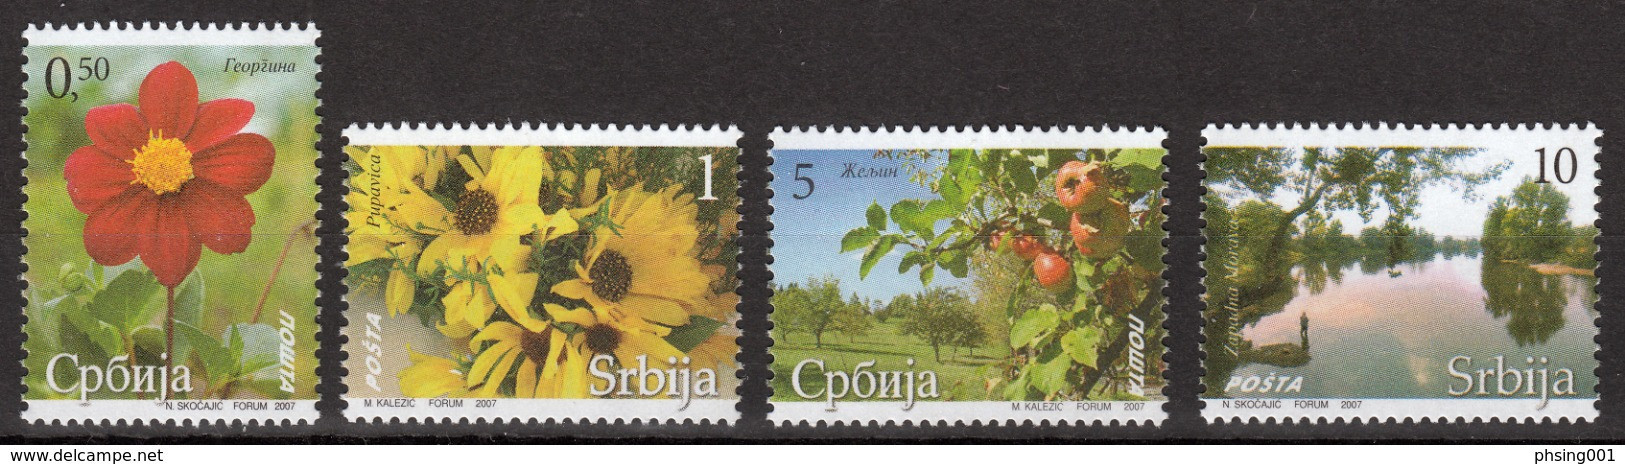 Serbia 2007 Flora Flowers Plants Nature, Definitive Set MNH - Serbie